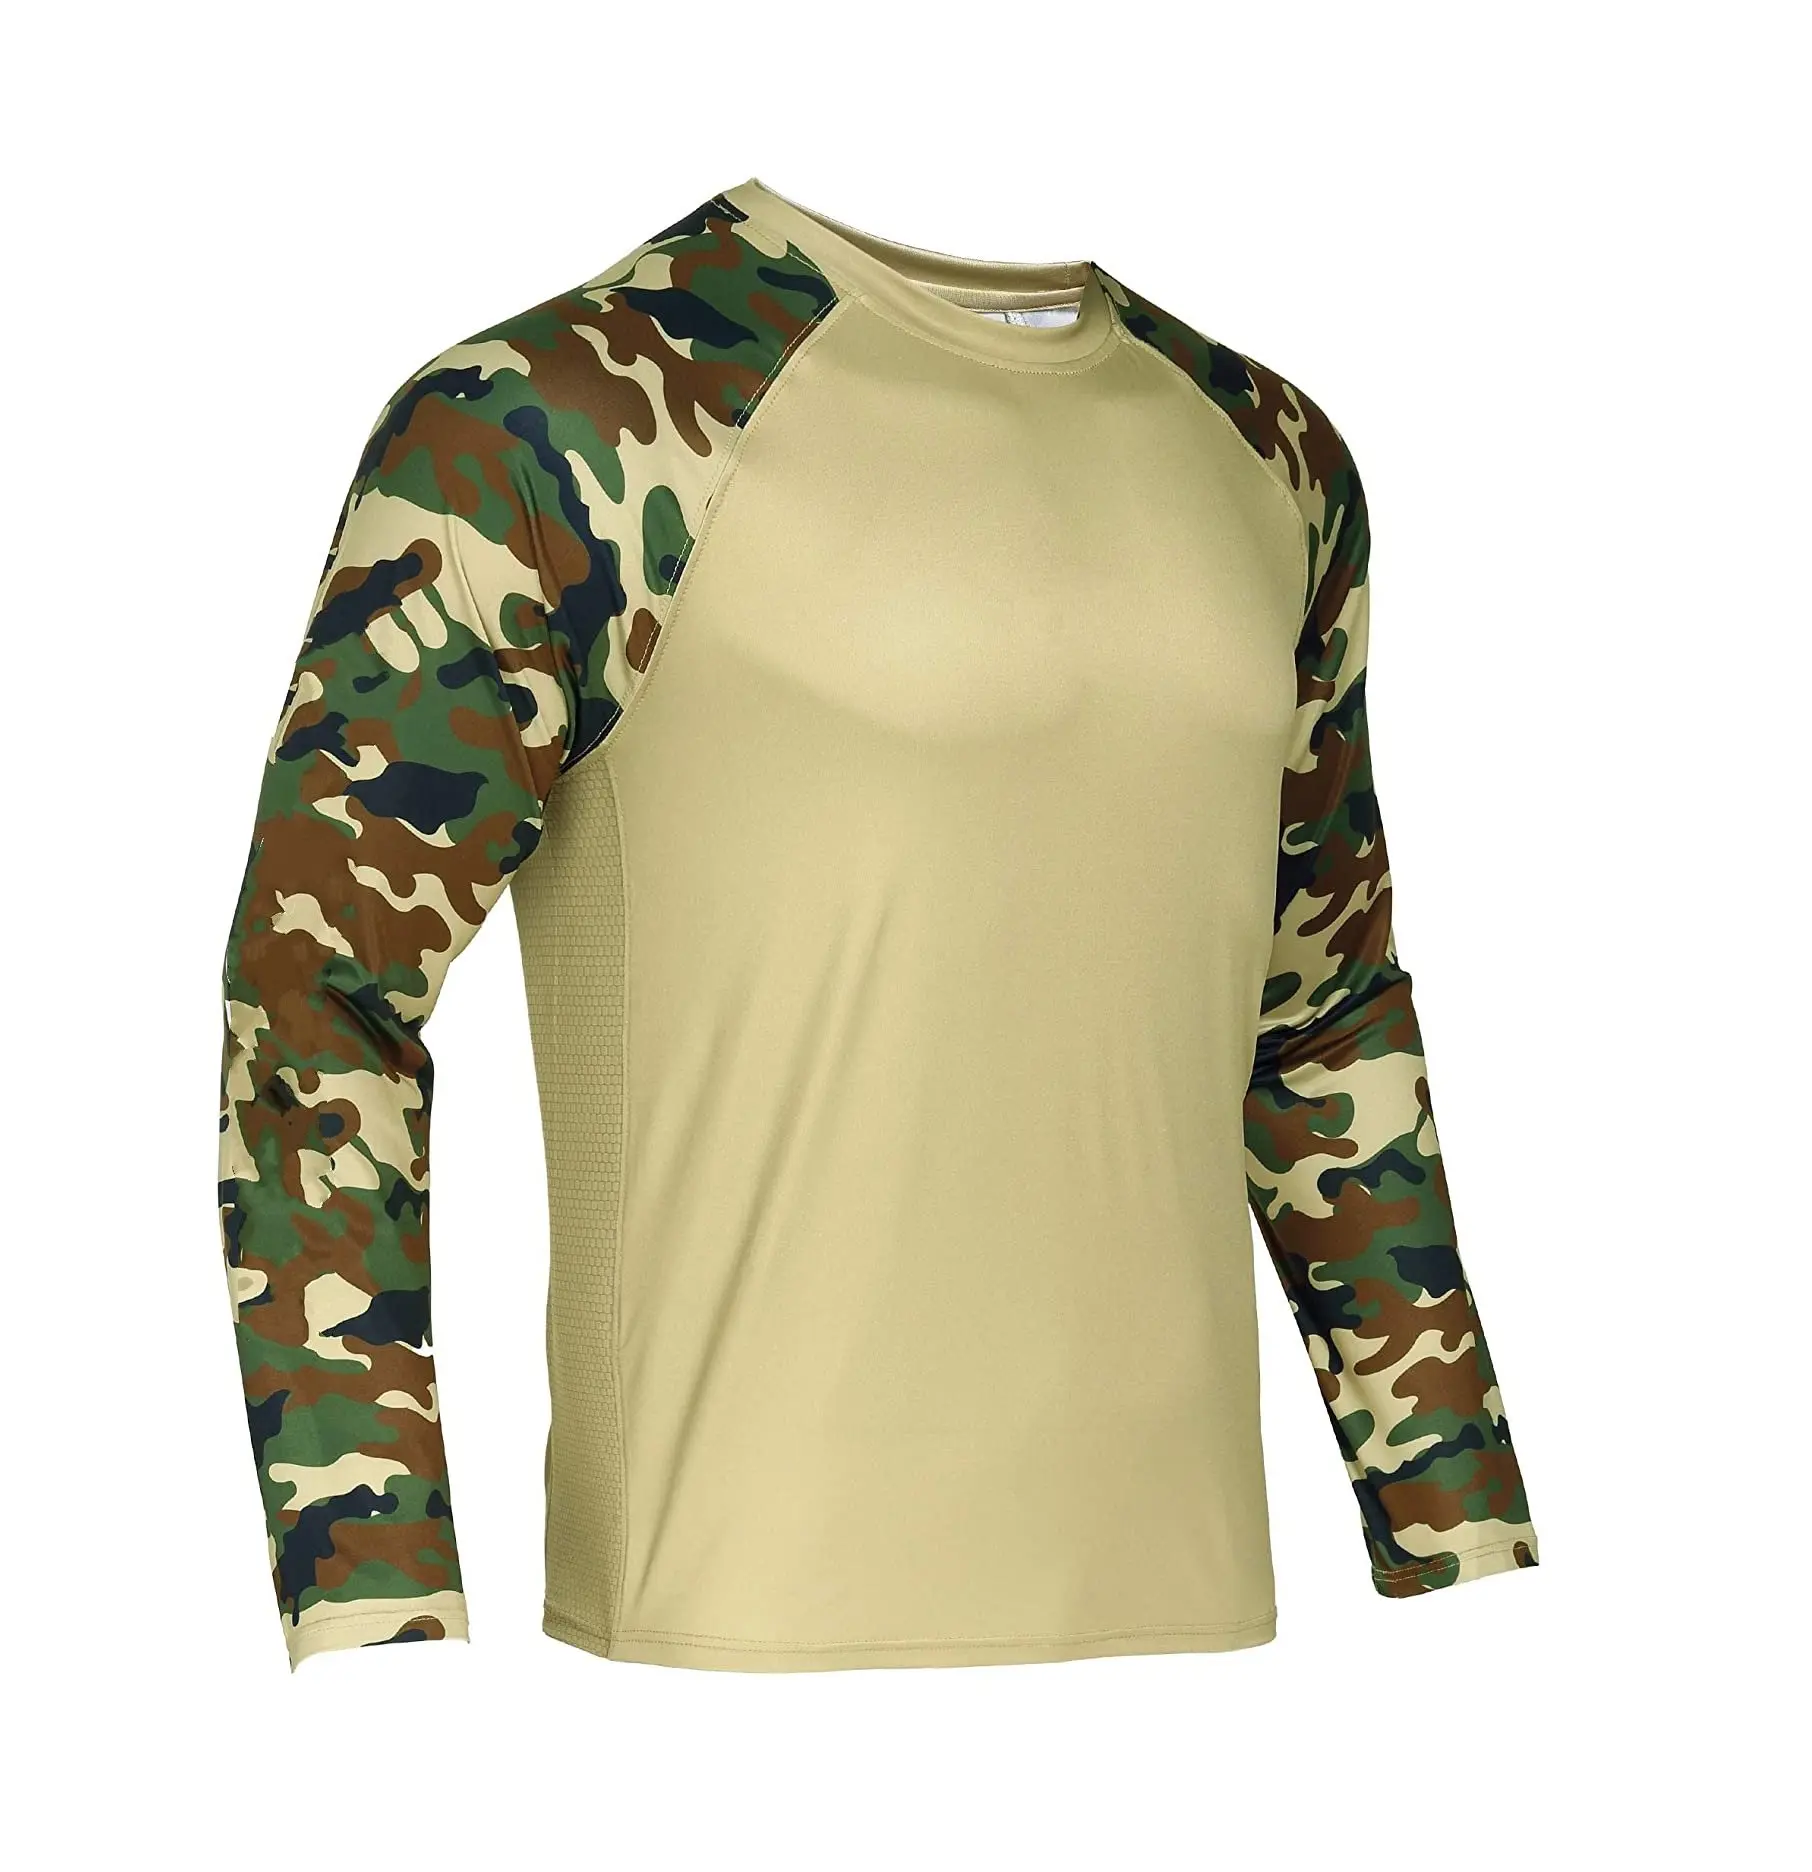 FREE SAMPLE Loose-Fit Fishing T-Shirt Vented Long Sleeve Shirt UPF50 Sleeve